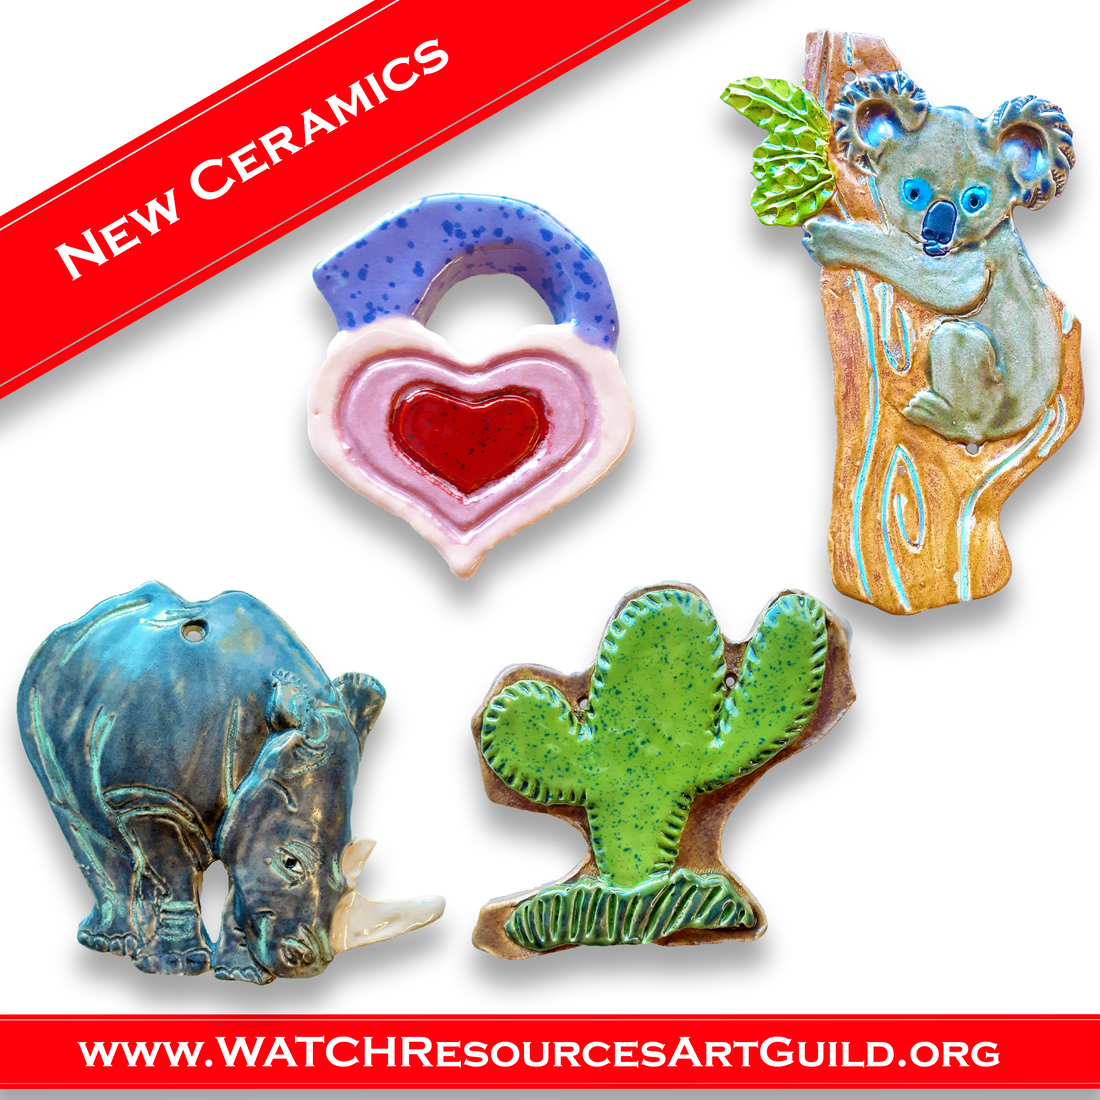 WATCH Resources Art Guild - New Ceramics!